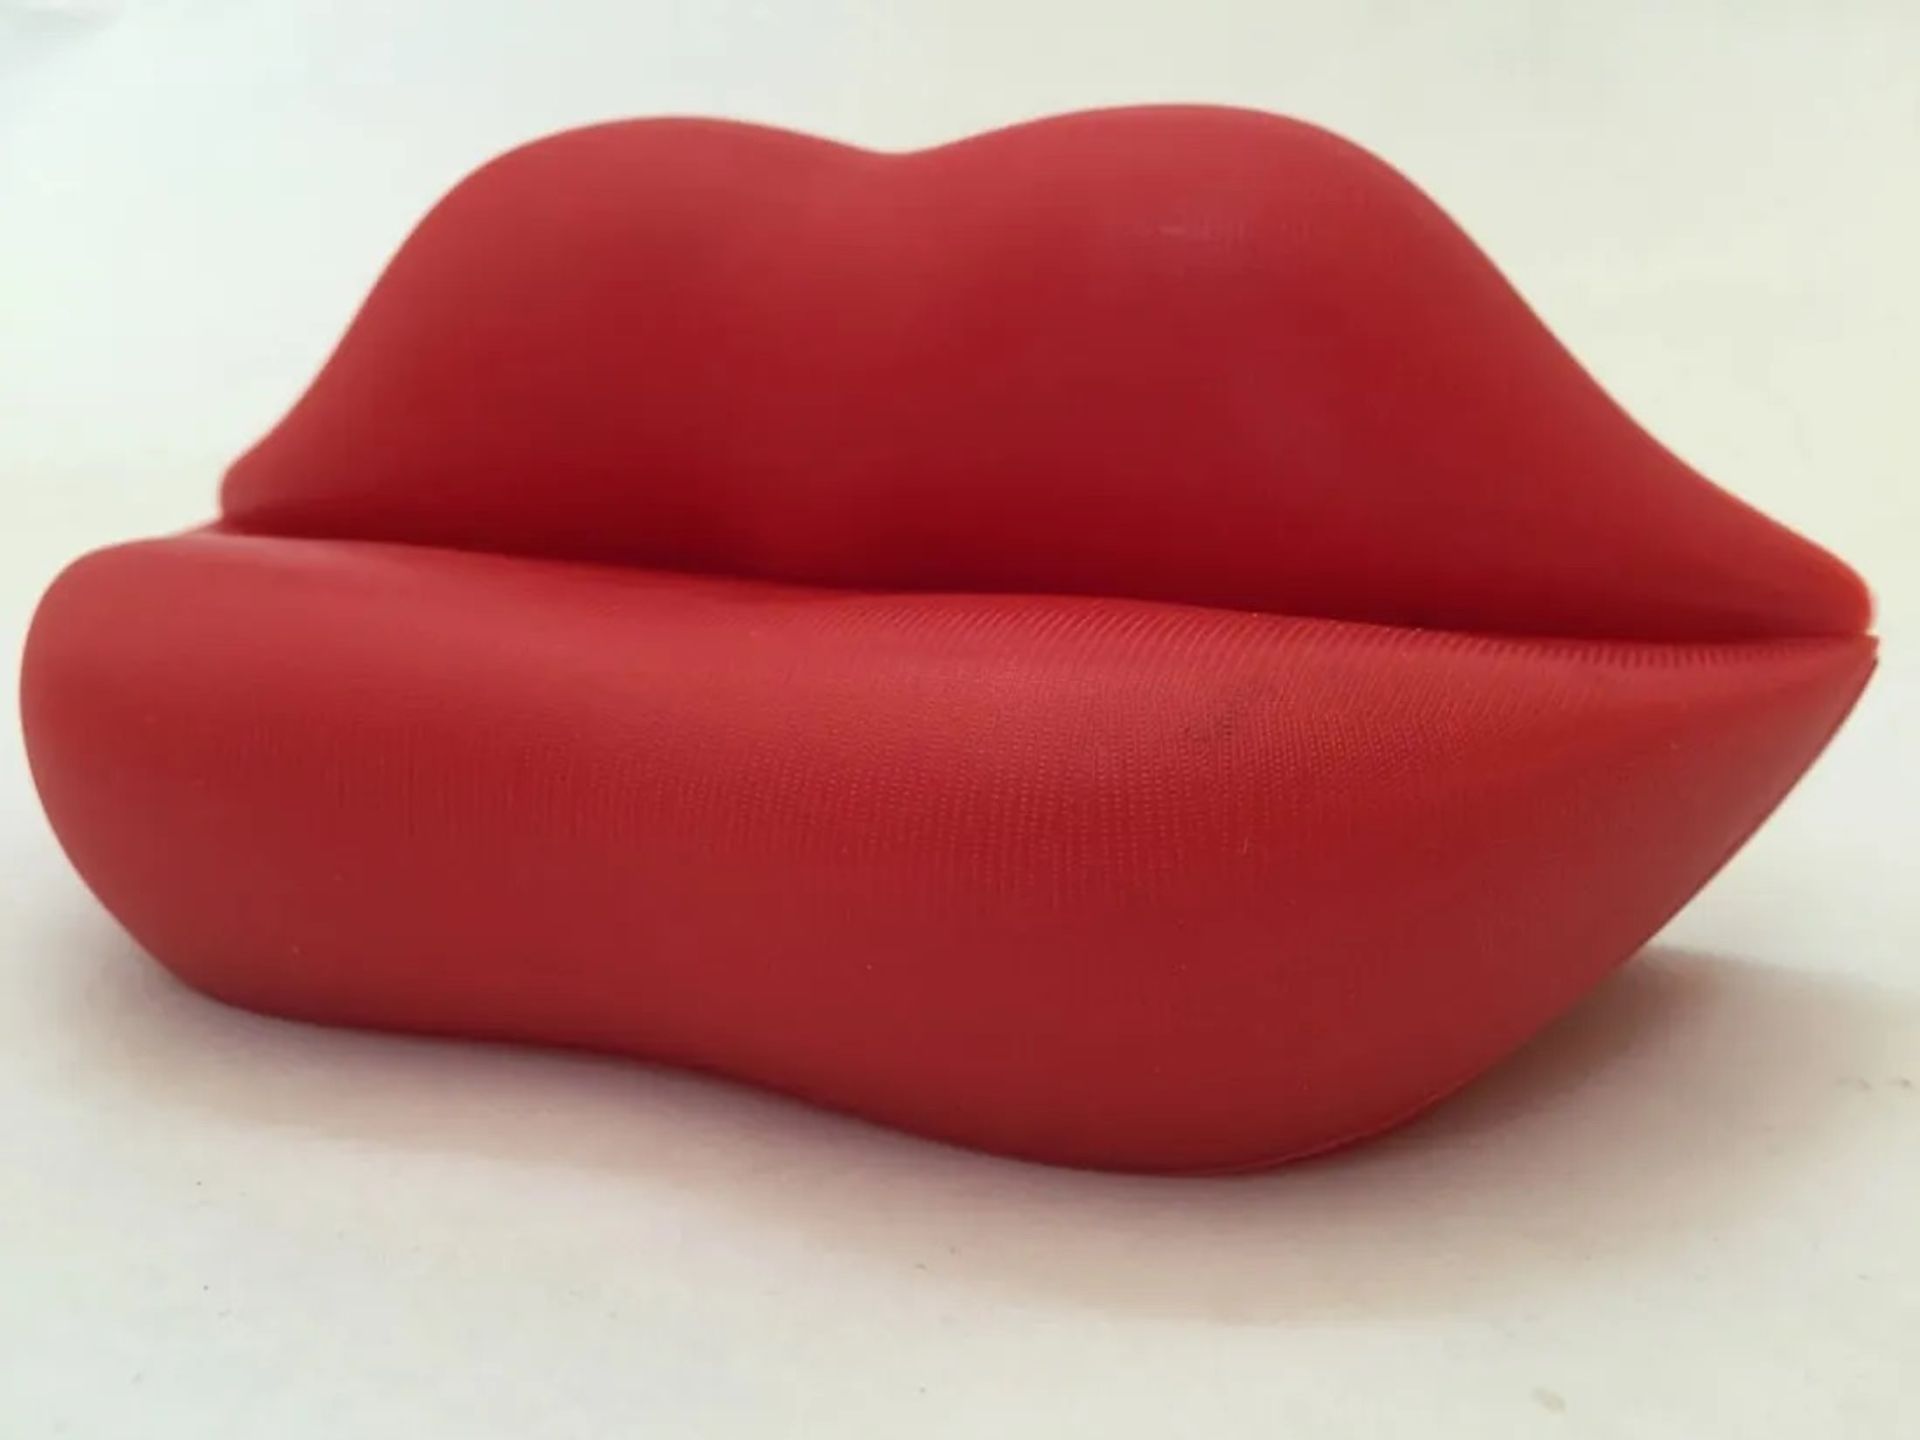 Salvador Dali "Lips" Sofa Desk Dsiplay